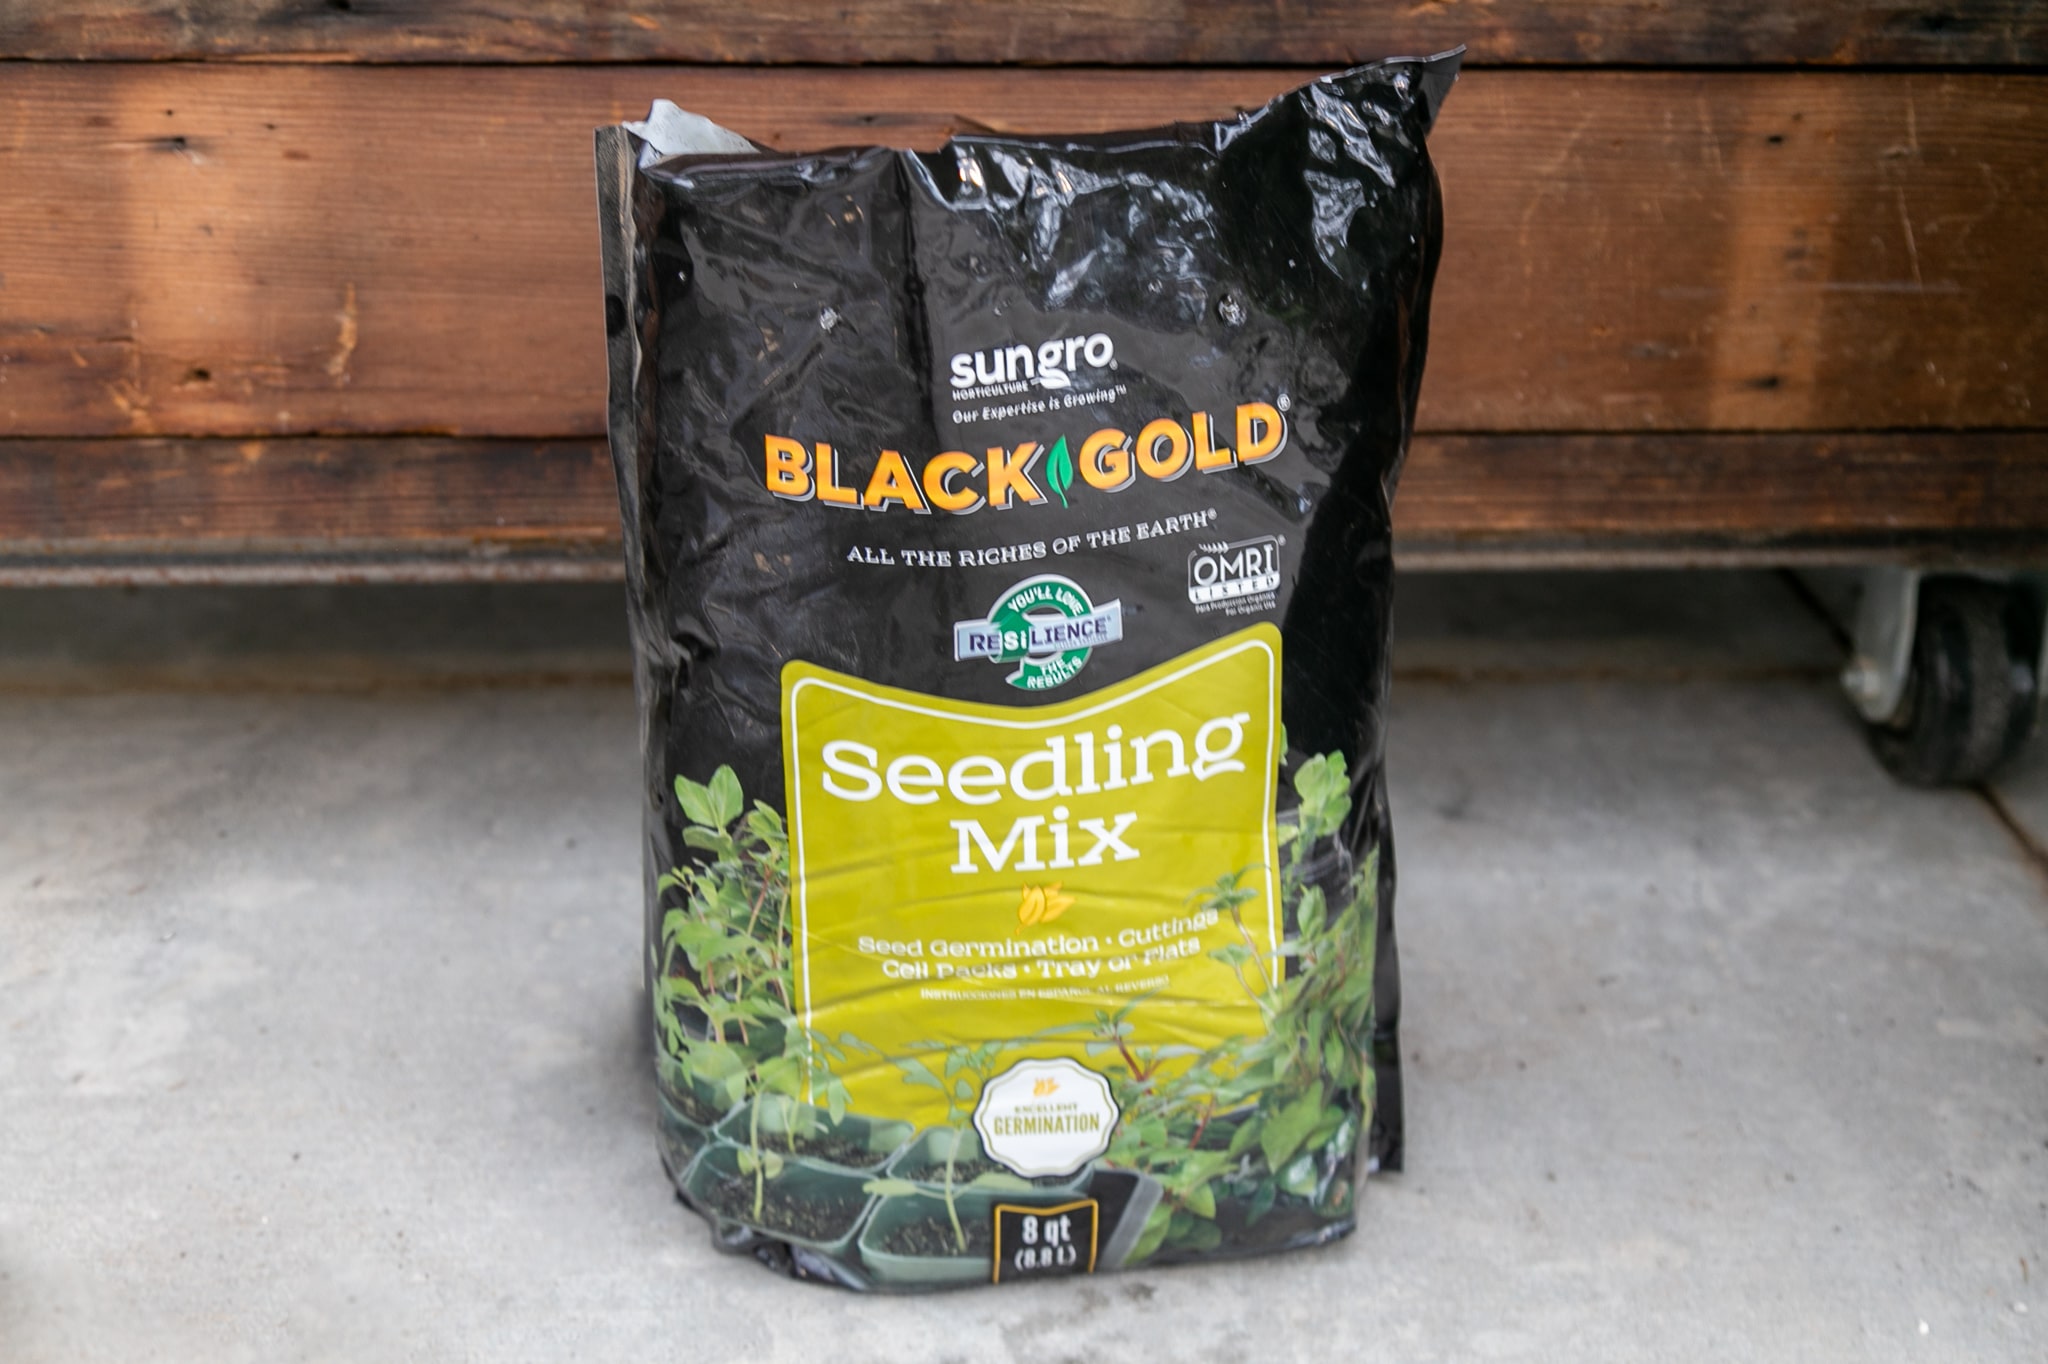 Black Gold Seeding Mix sold at Franz Witte